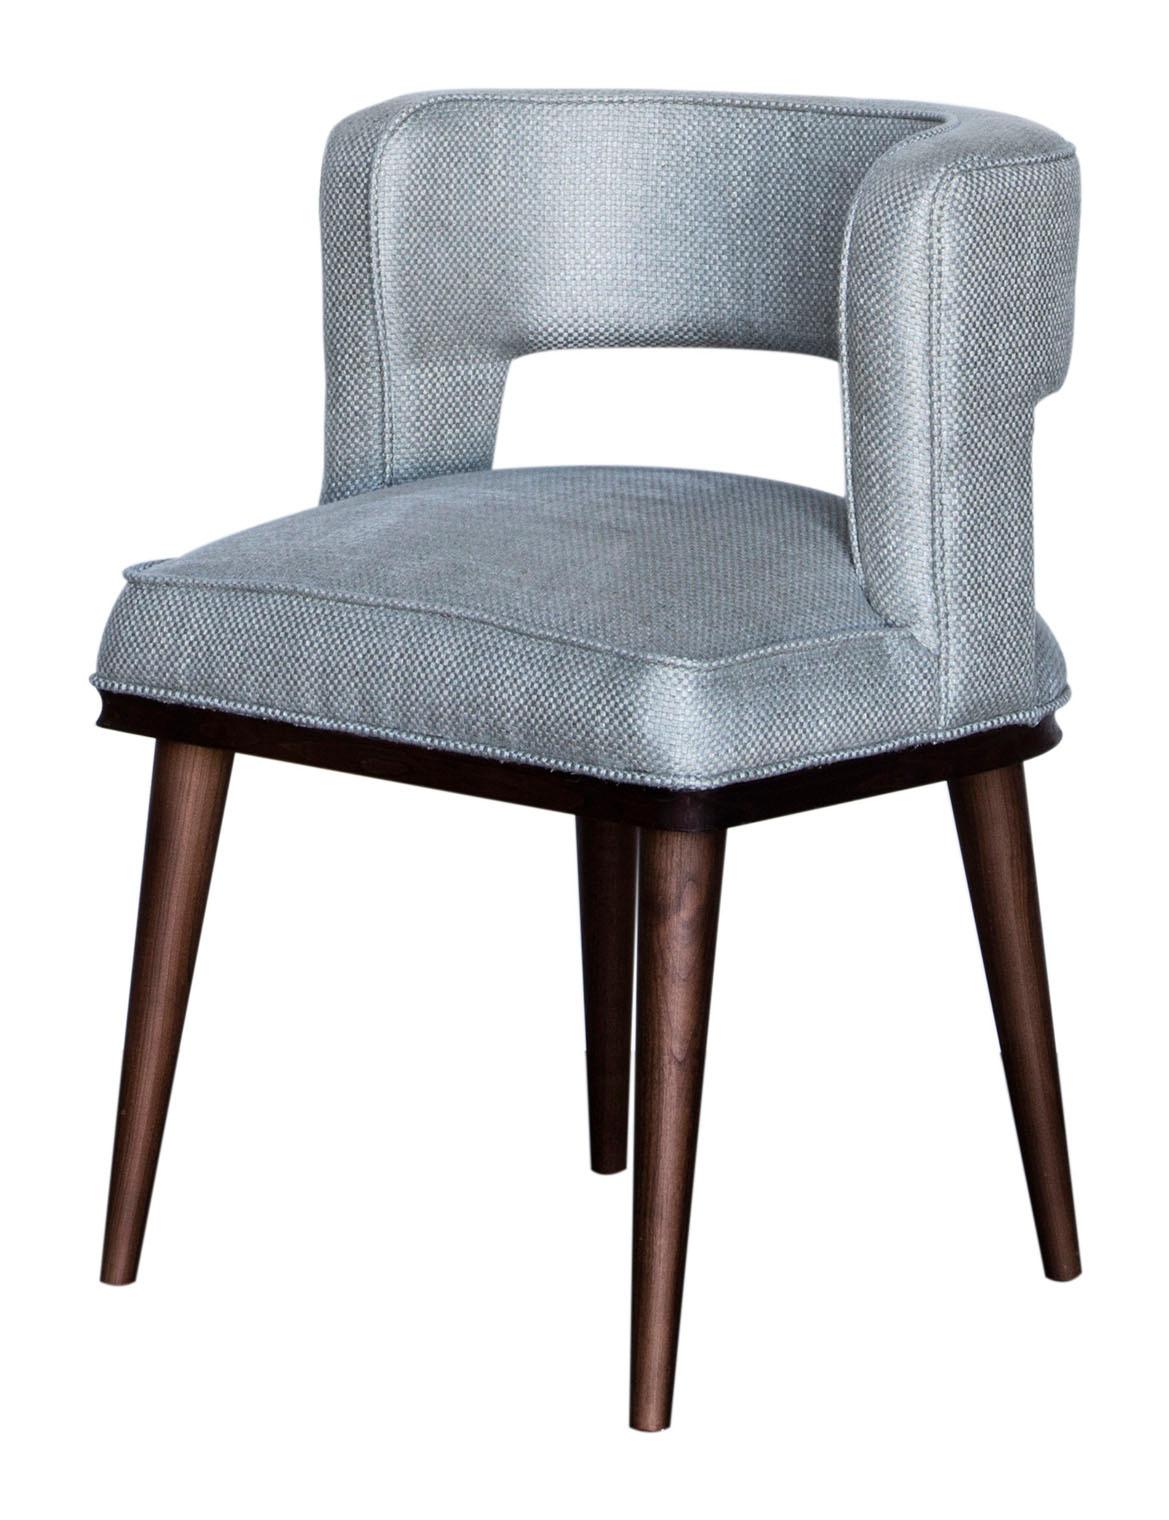 Italian Fiesole Easy Chair For Sale